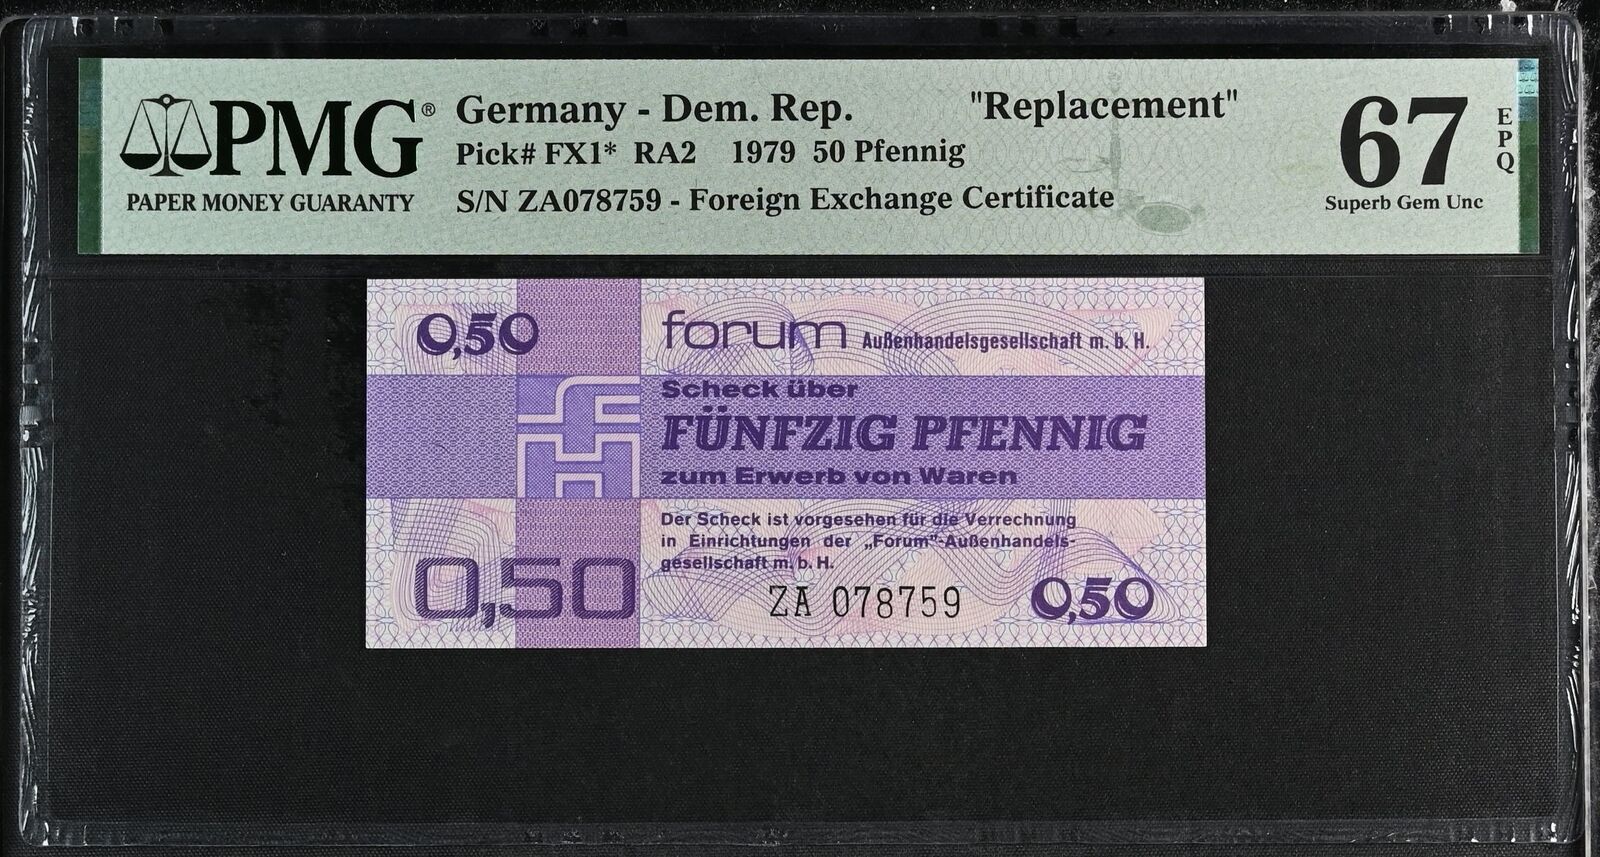 Germany 50 Pfennig 1979 P FX1* Replacement Superb Gem UNC PMG 67 